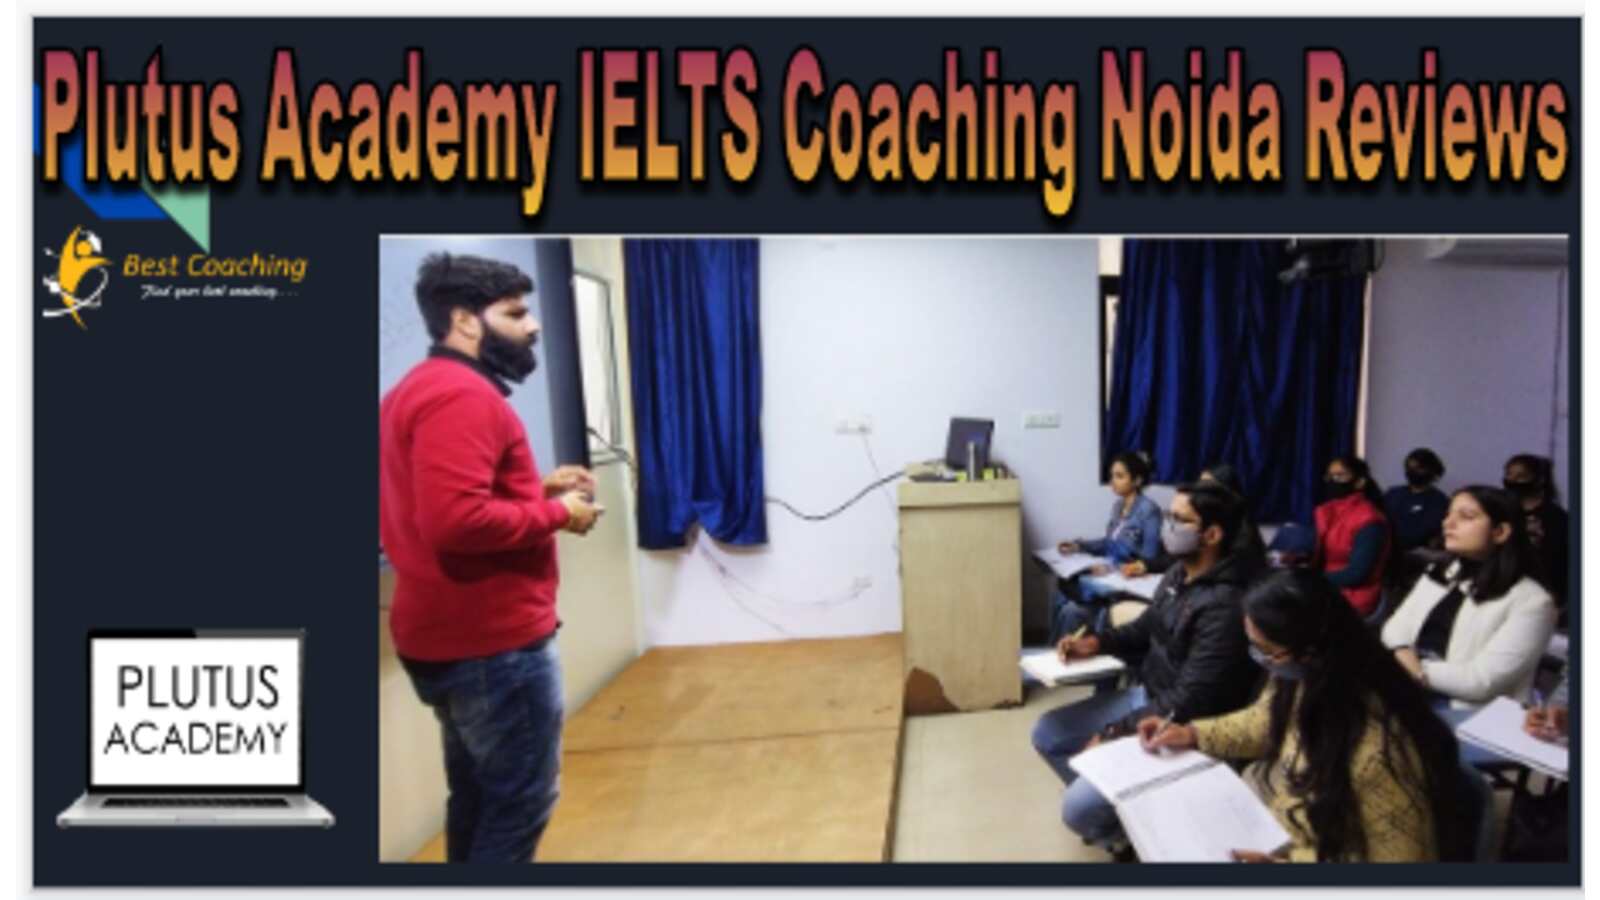 Plutus Academy IELTS Coaching Noida Reviews